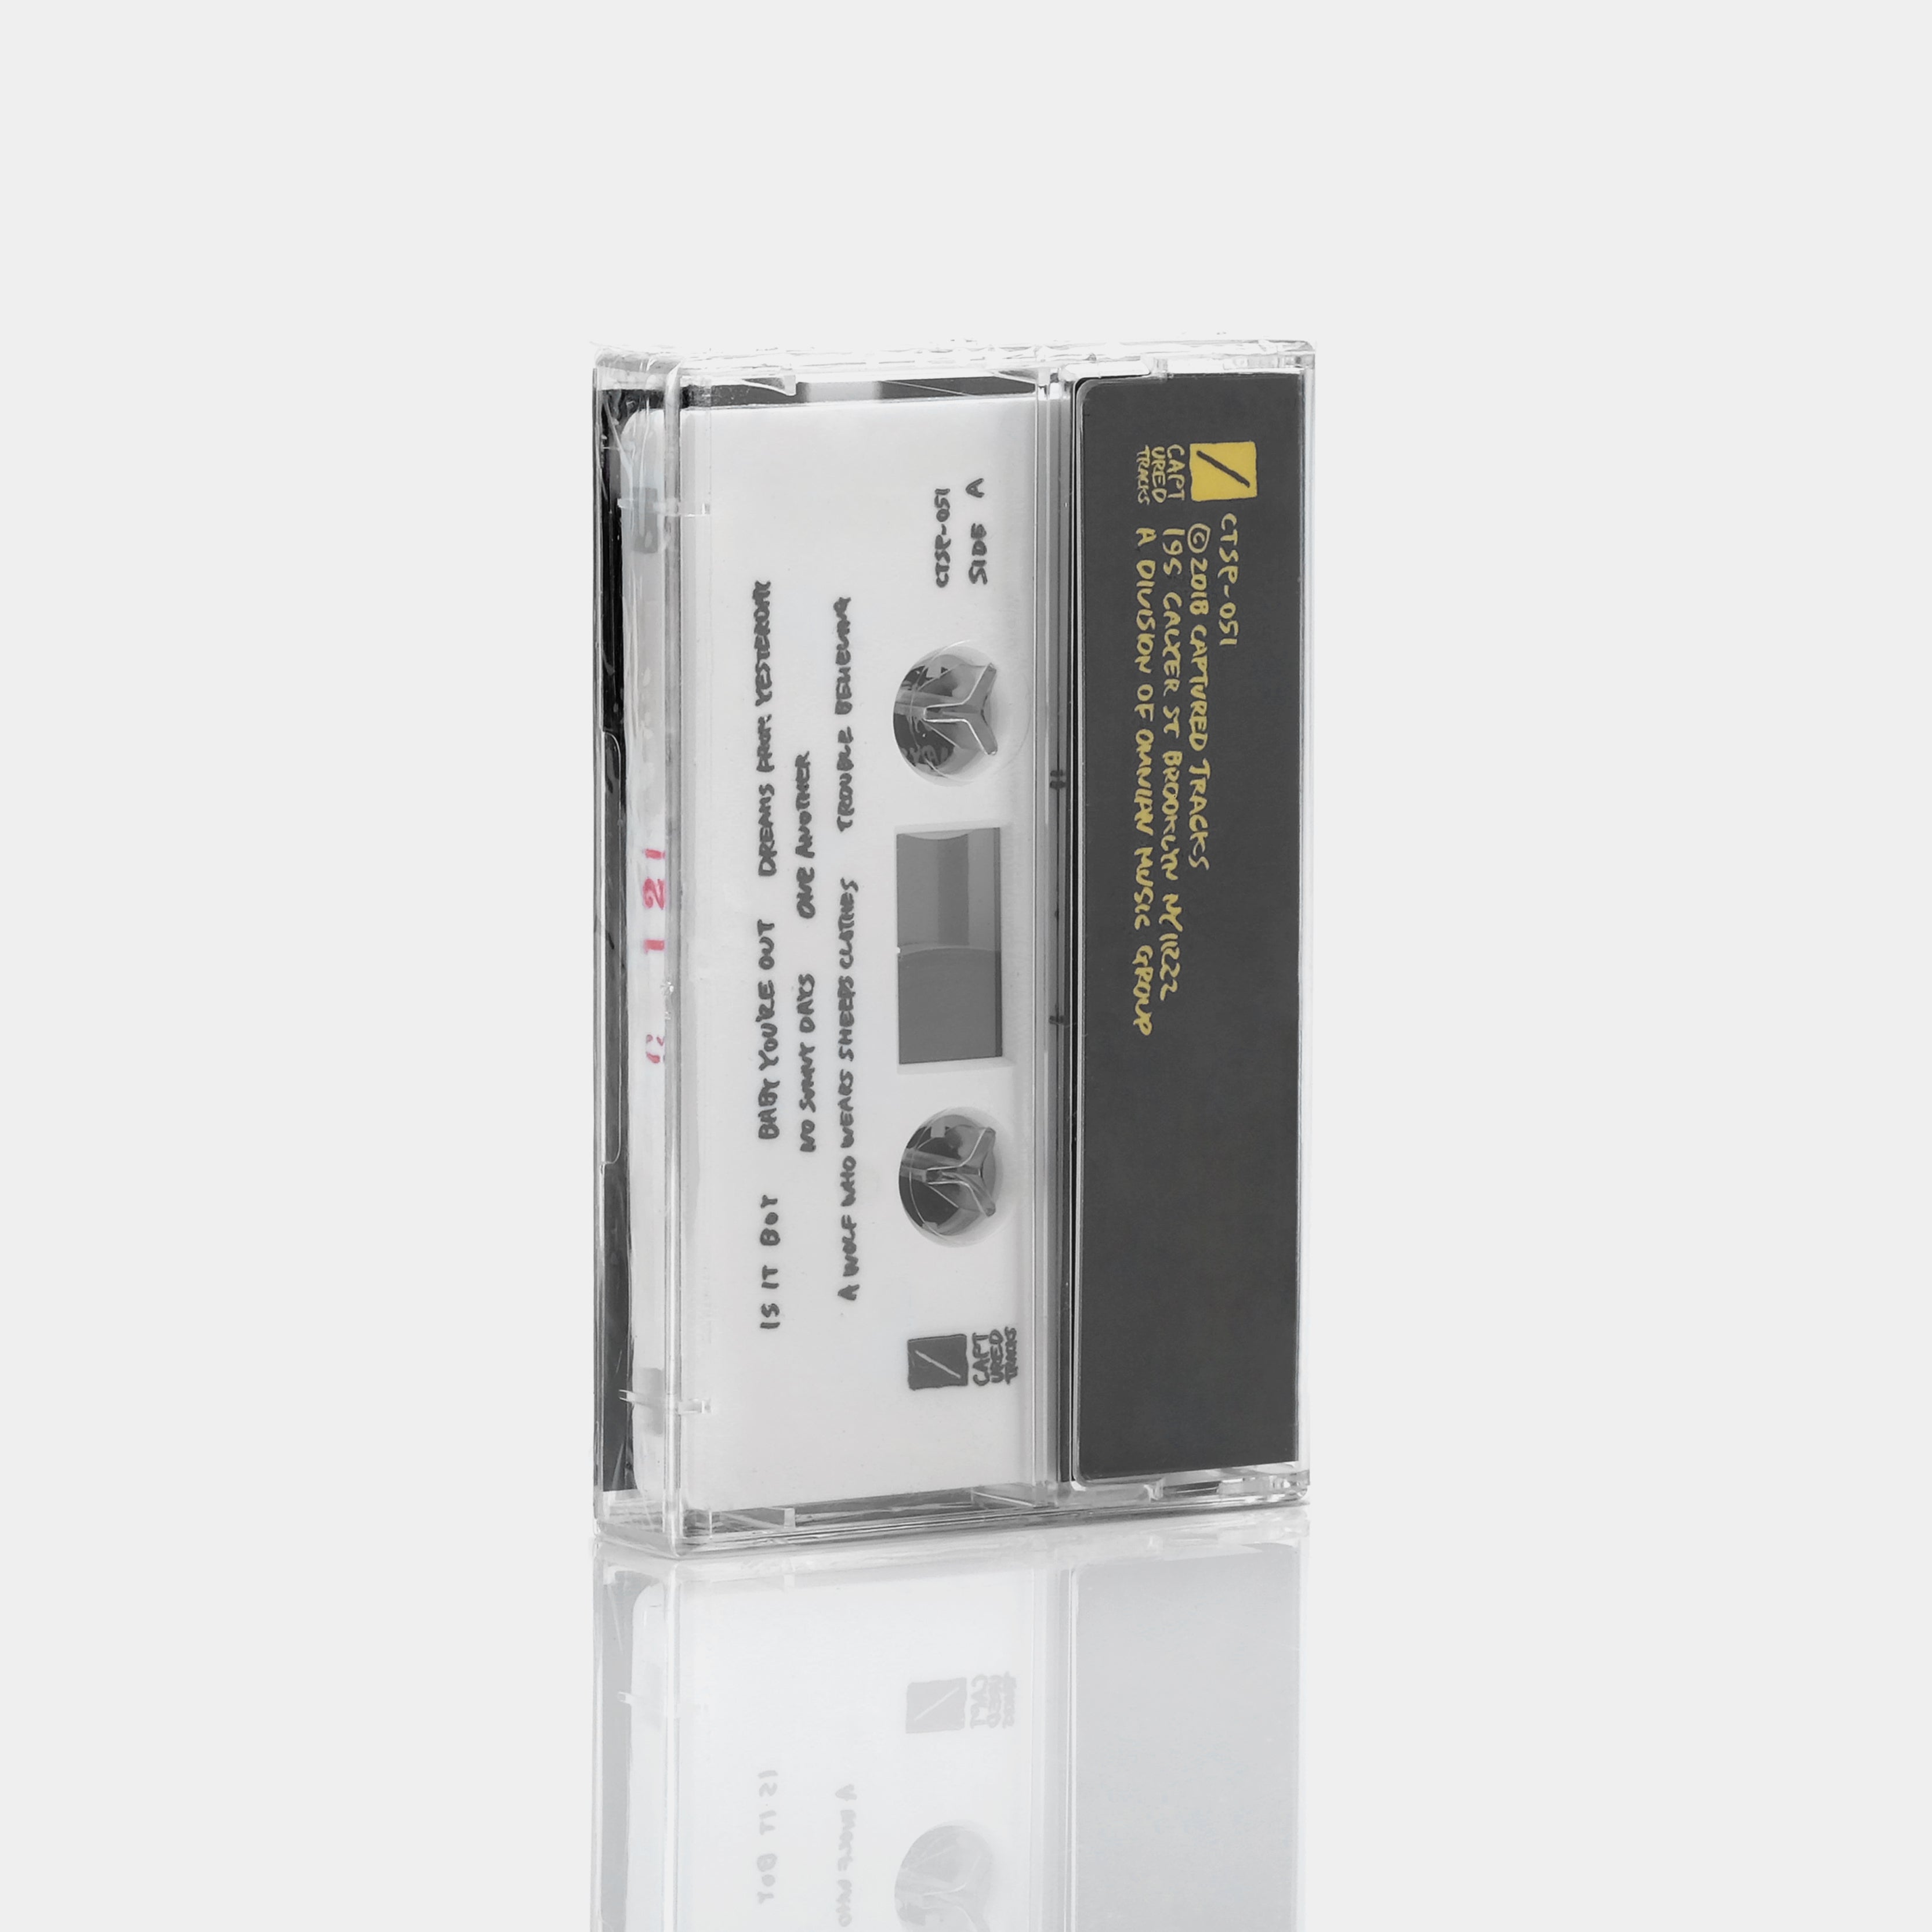 Mac Demarco - Old Dog Demos Cassette Tape